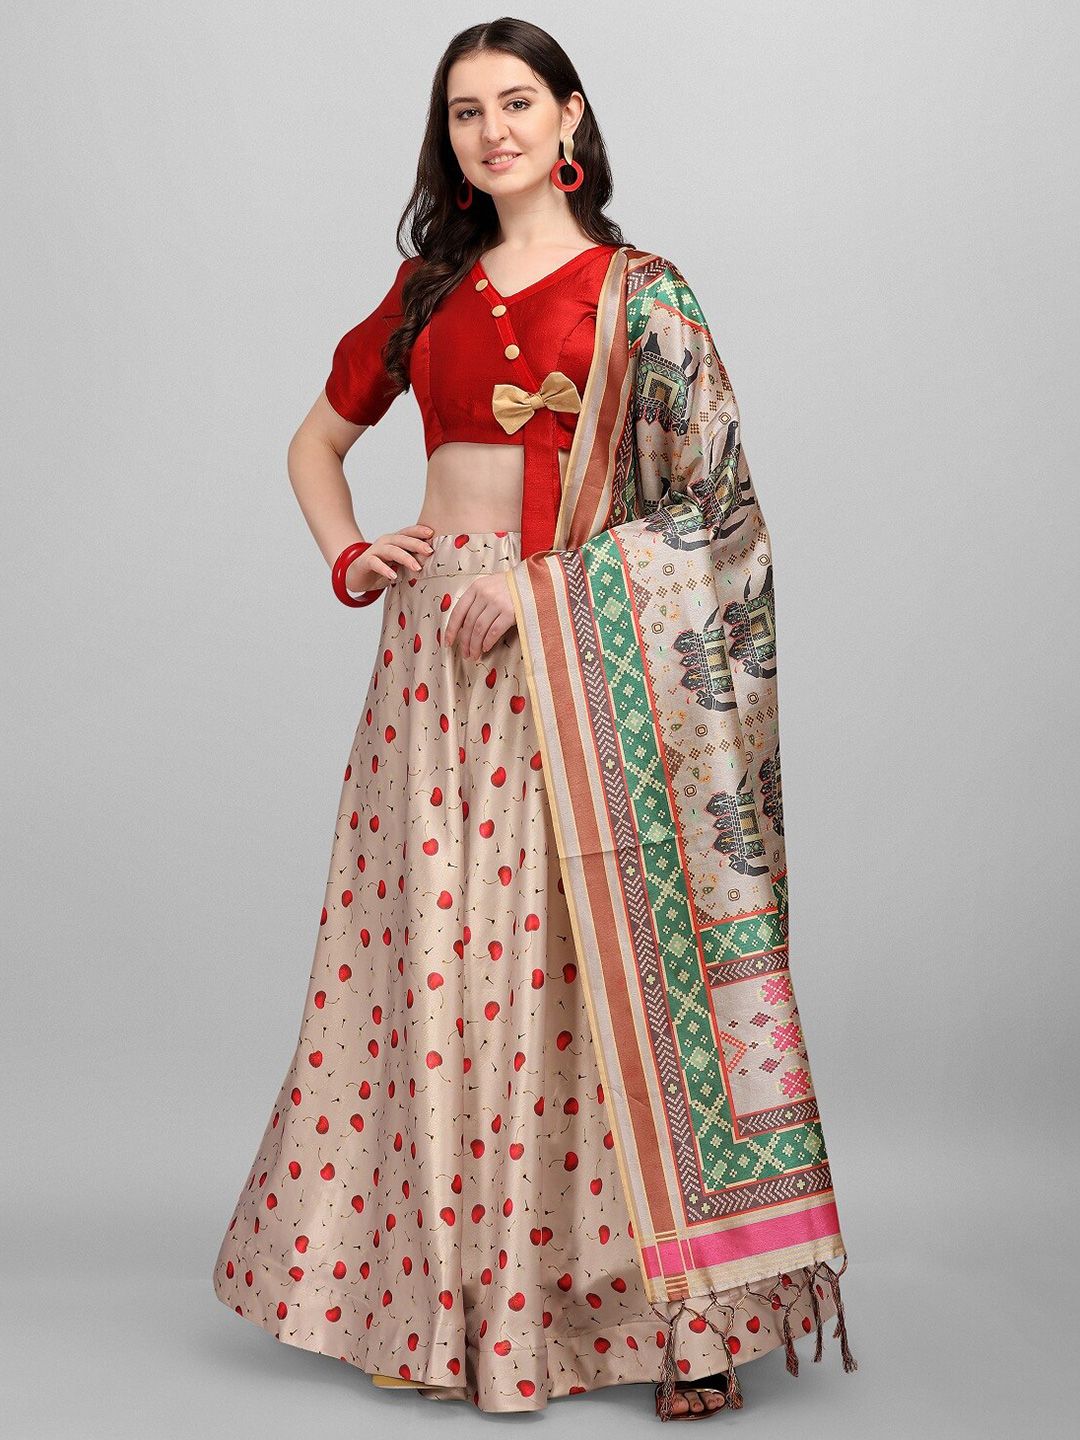 Fashionuma Beige & Red Semi-Stitched Lehenga & Unstitched Blouse With Dupatta Price in India